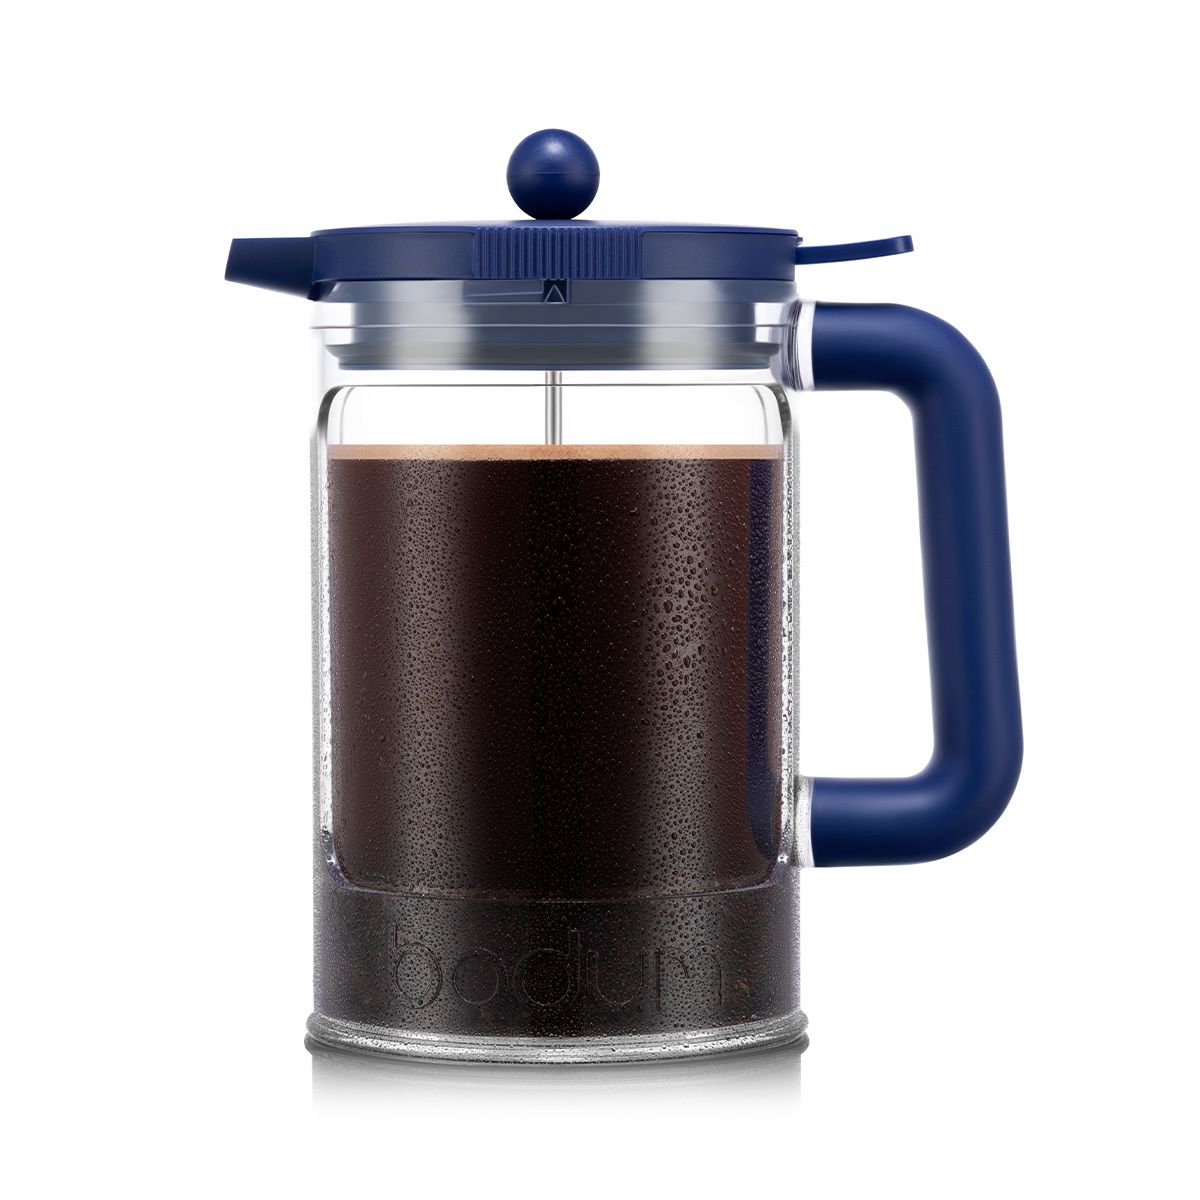 Bodum BEAN Cold Brew Coffee Maker, 51 Oz/1.5L, White/Black